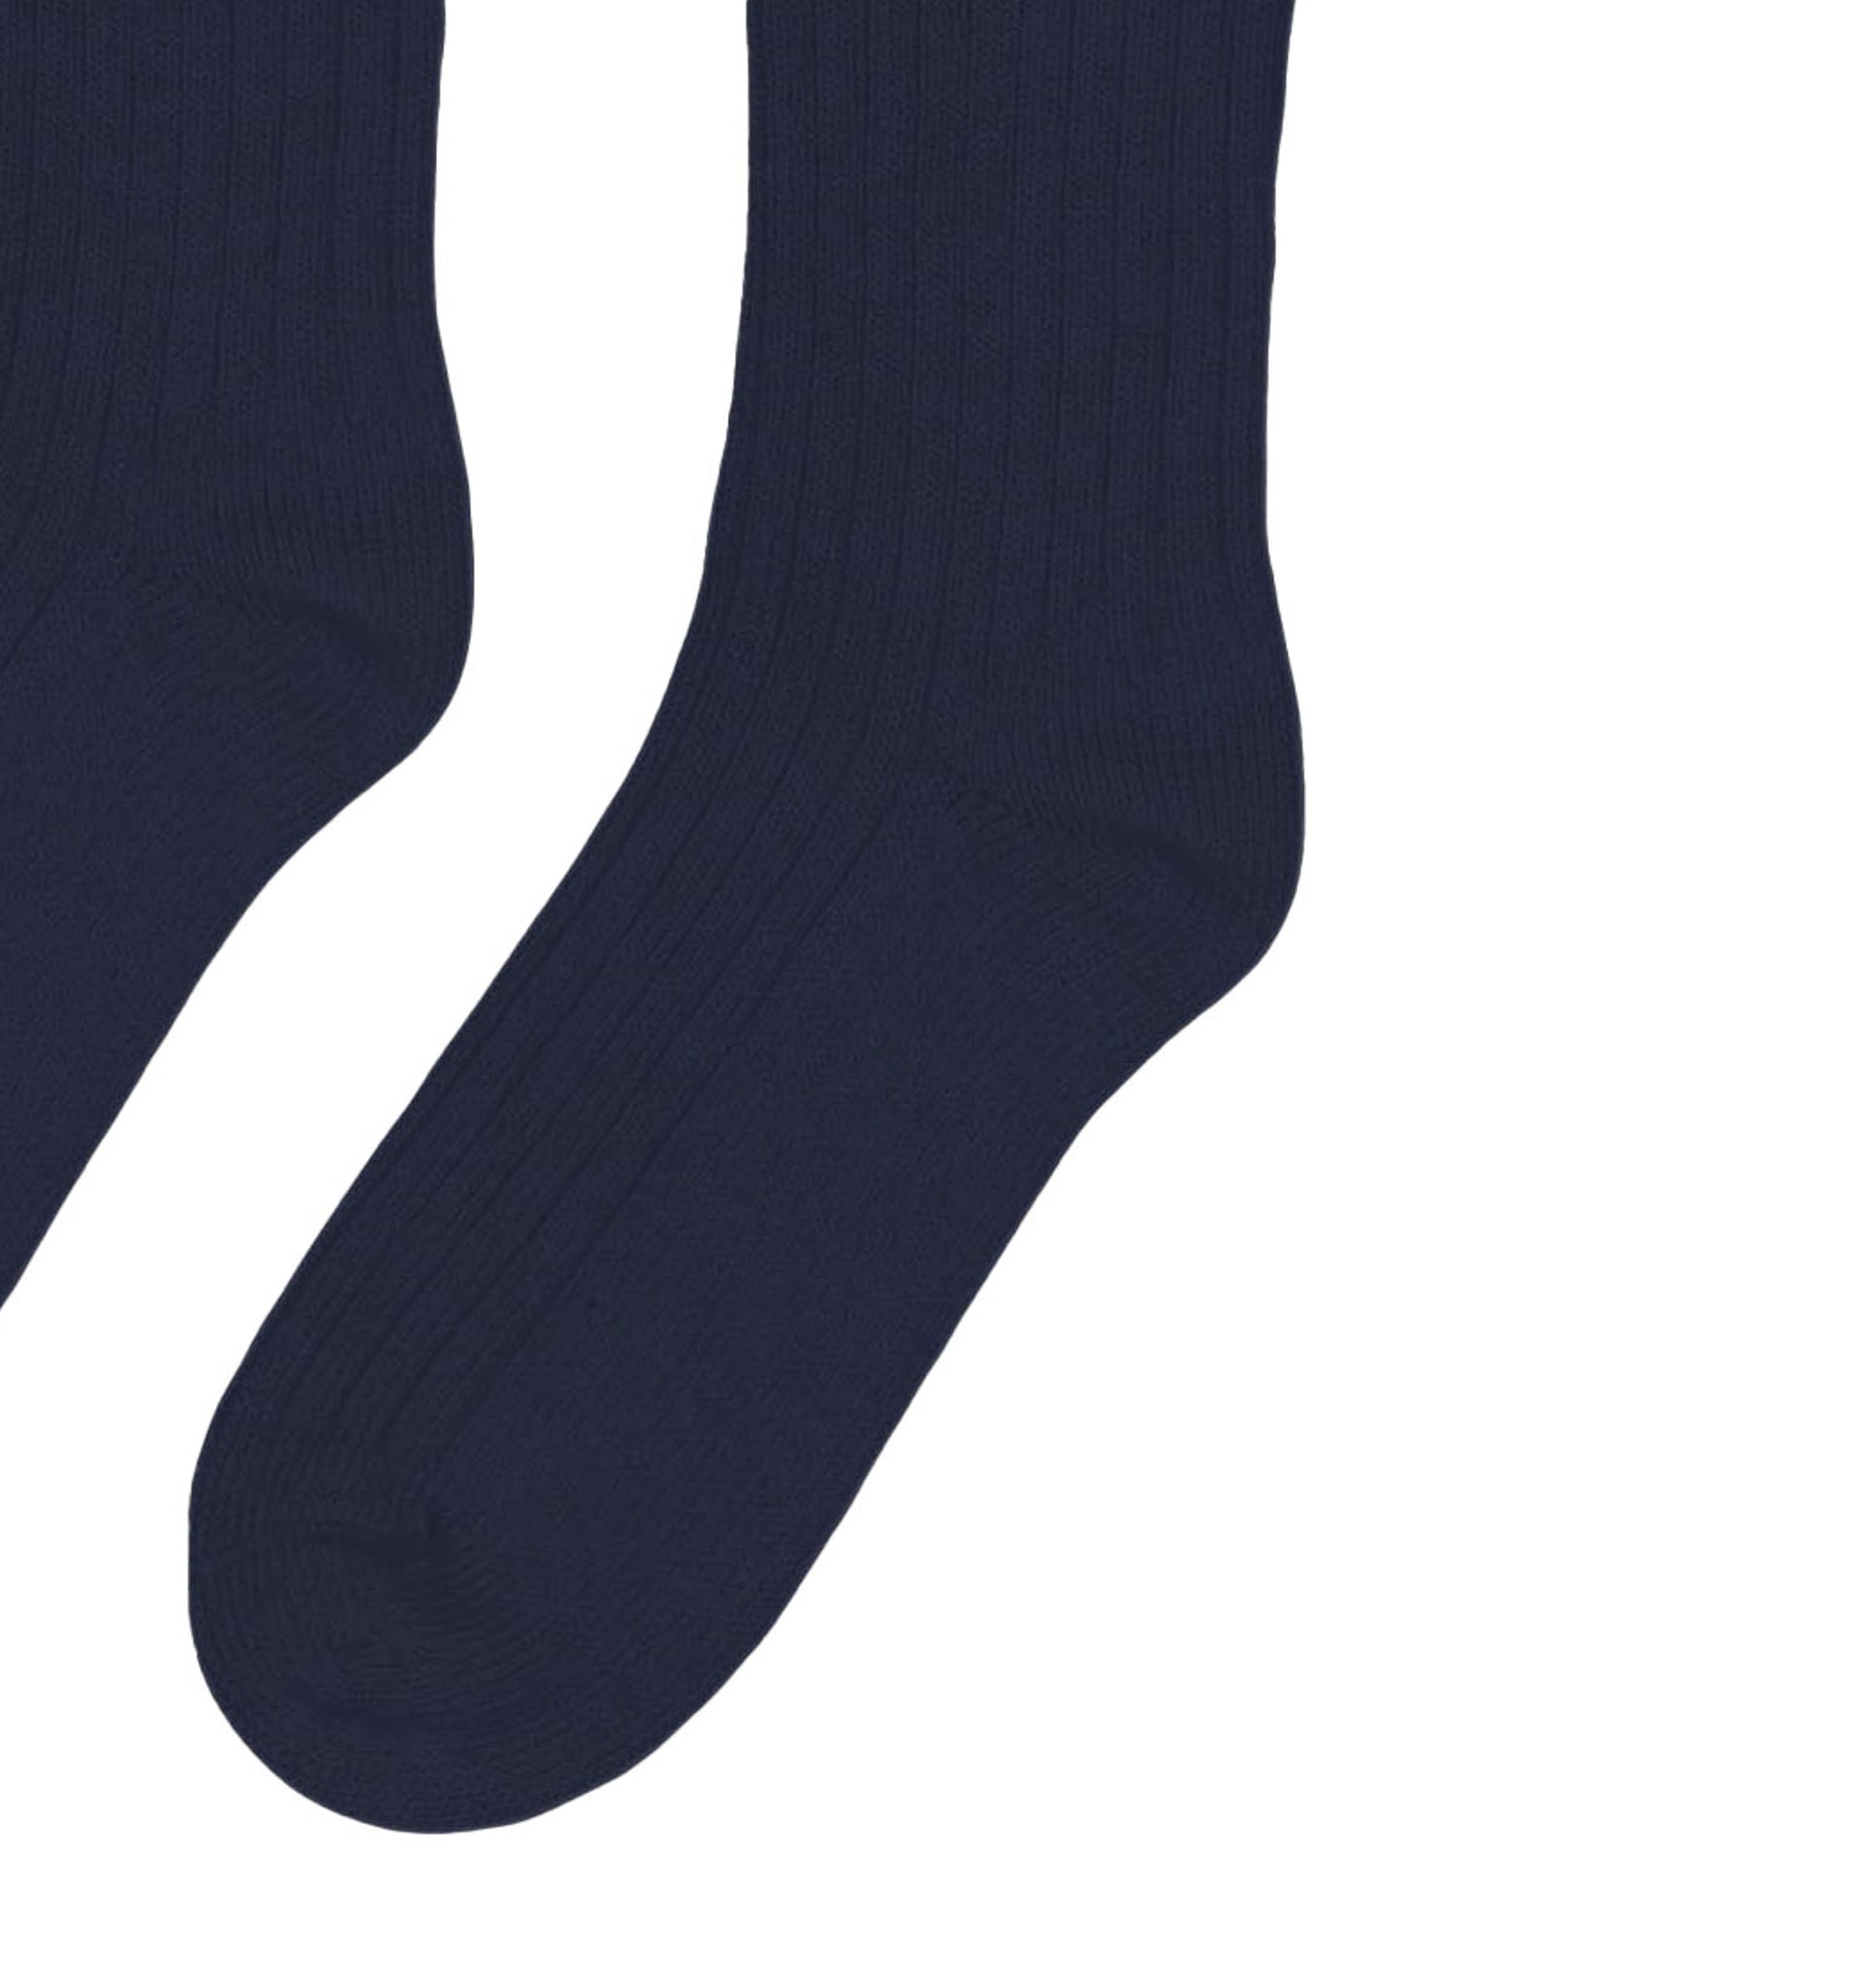 Colorful Standard Blue Socks